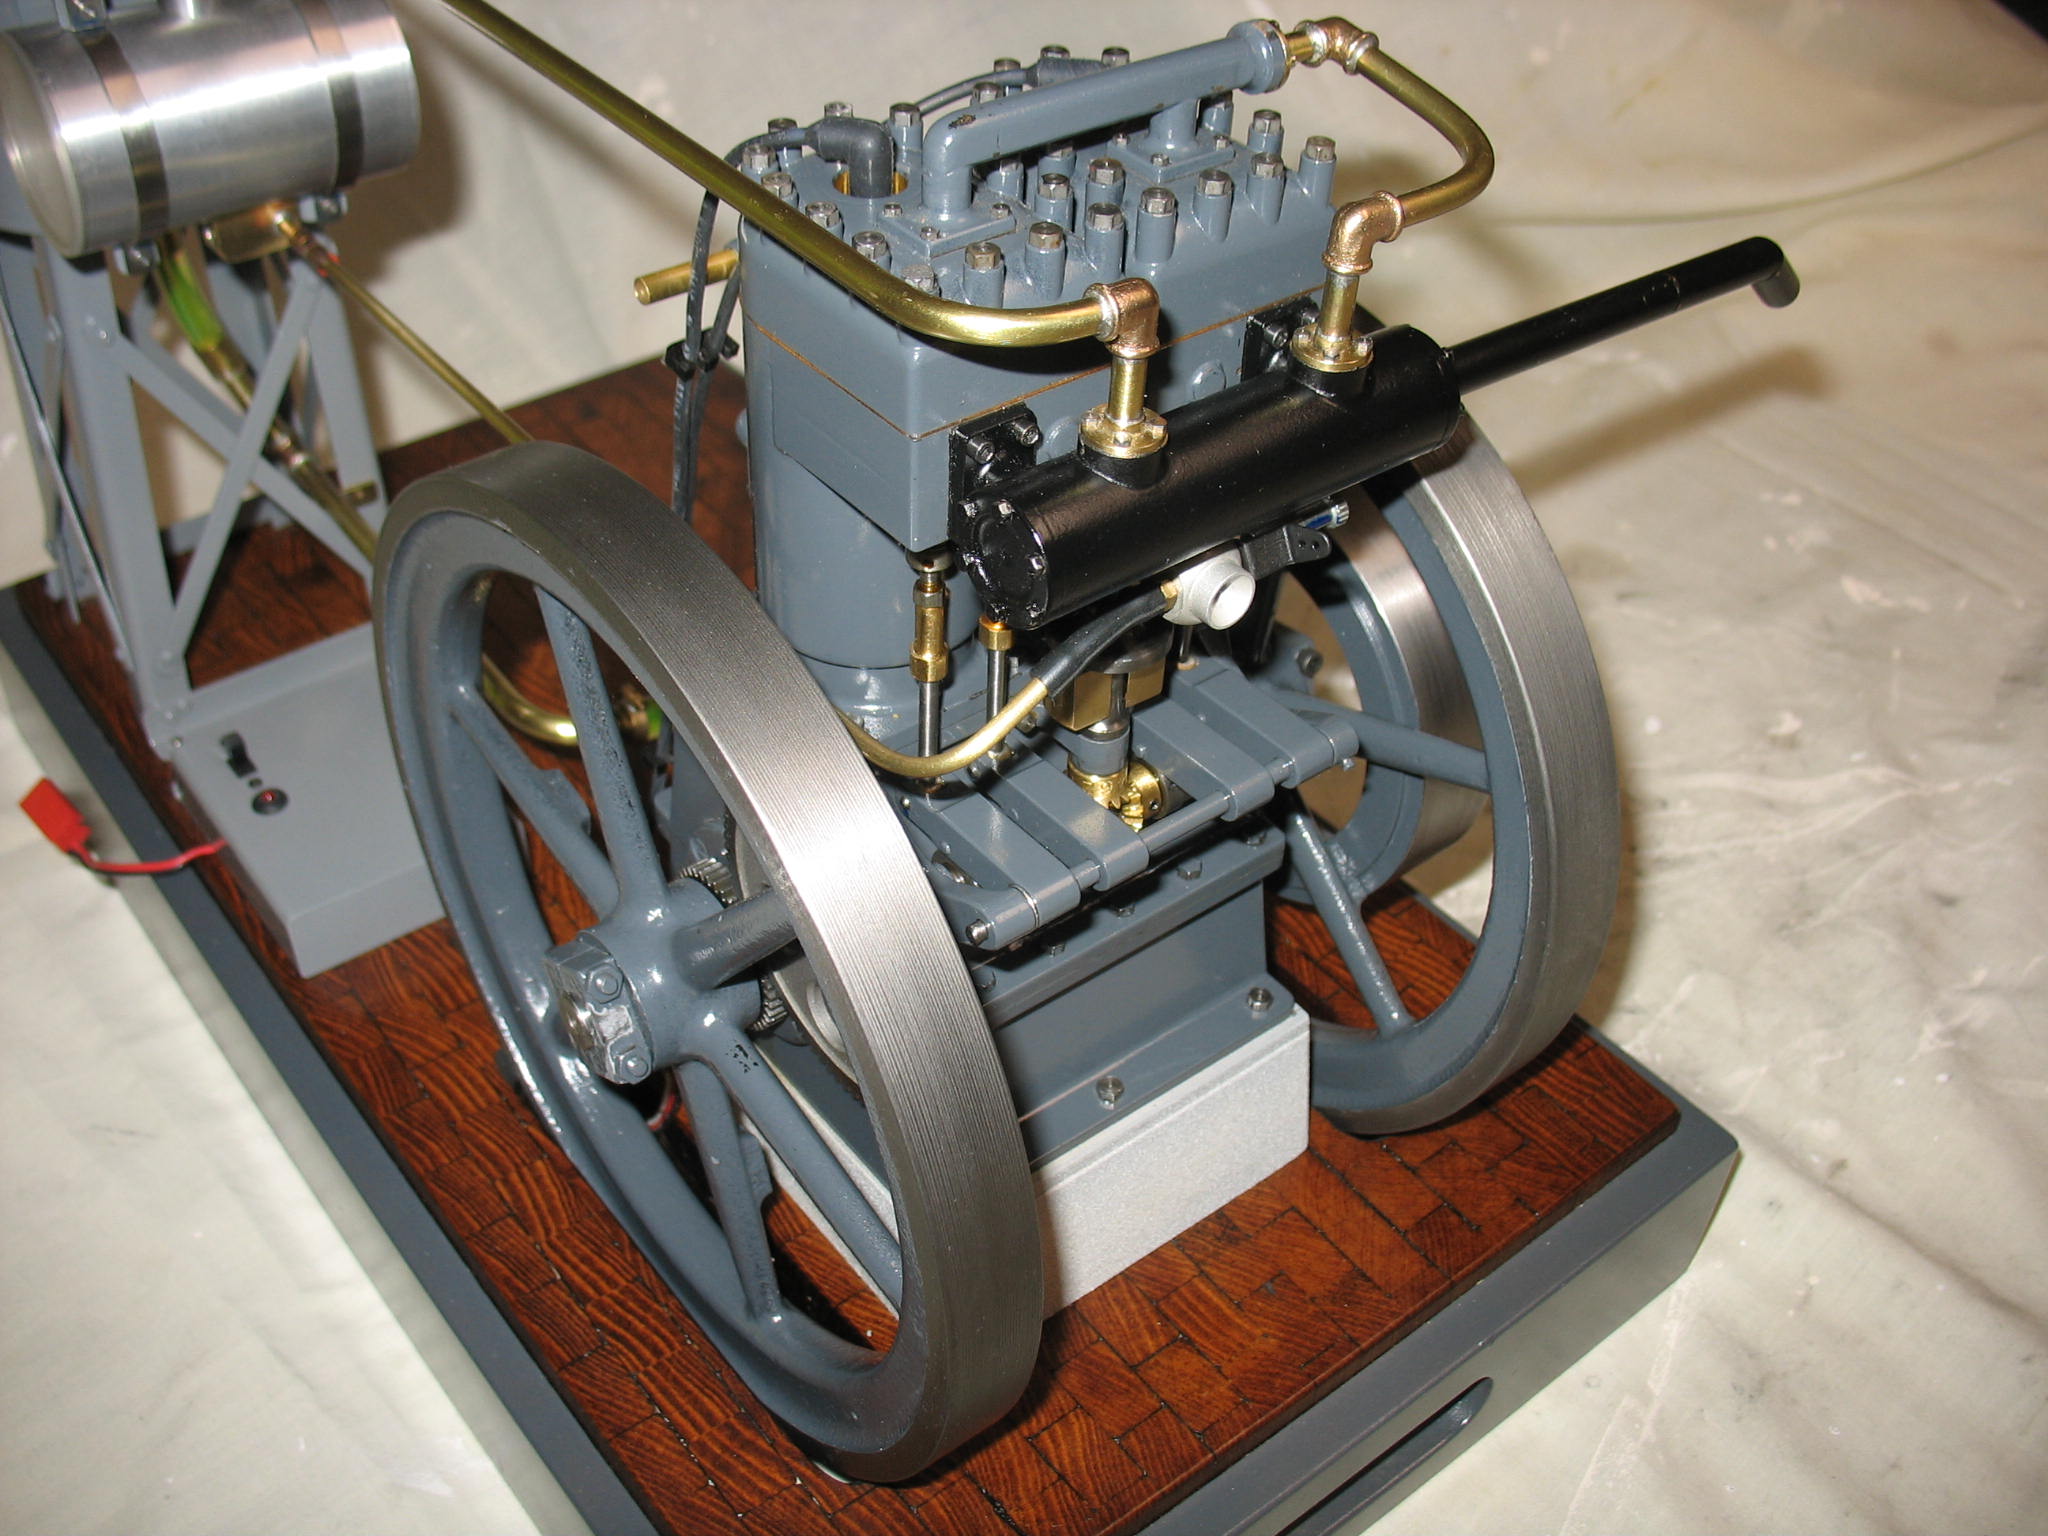 Doug's 1/8 scale Nash engine. 